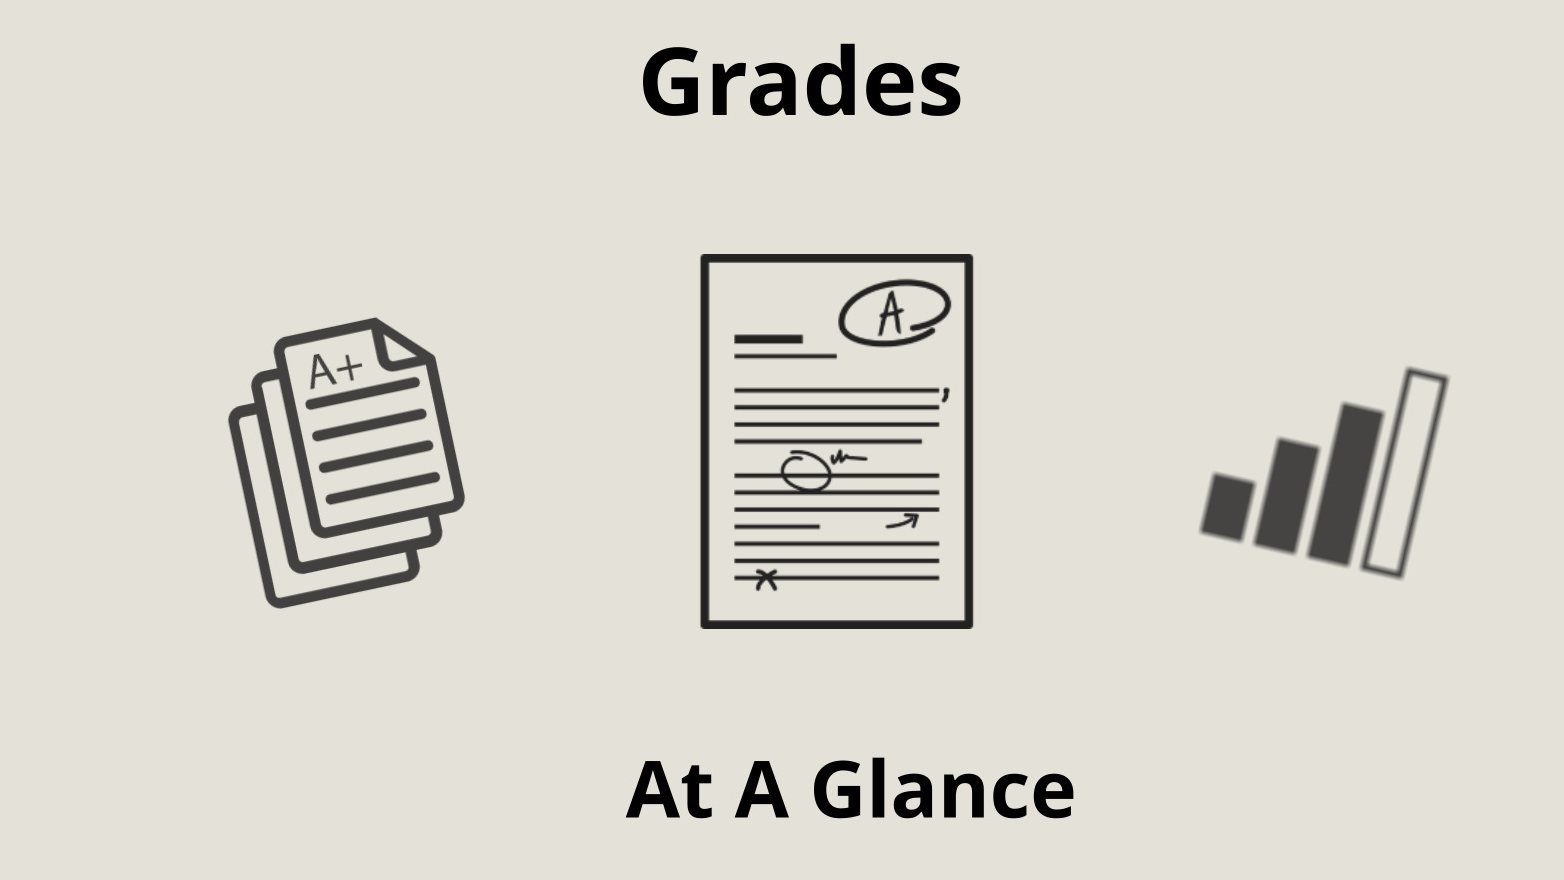 Grades at a glance